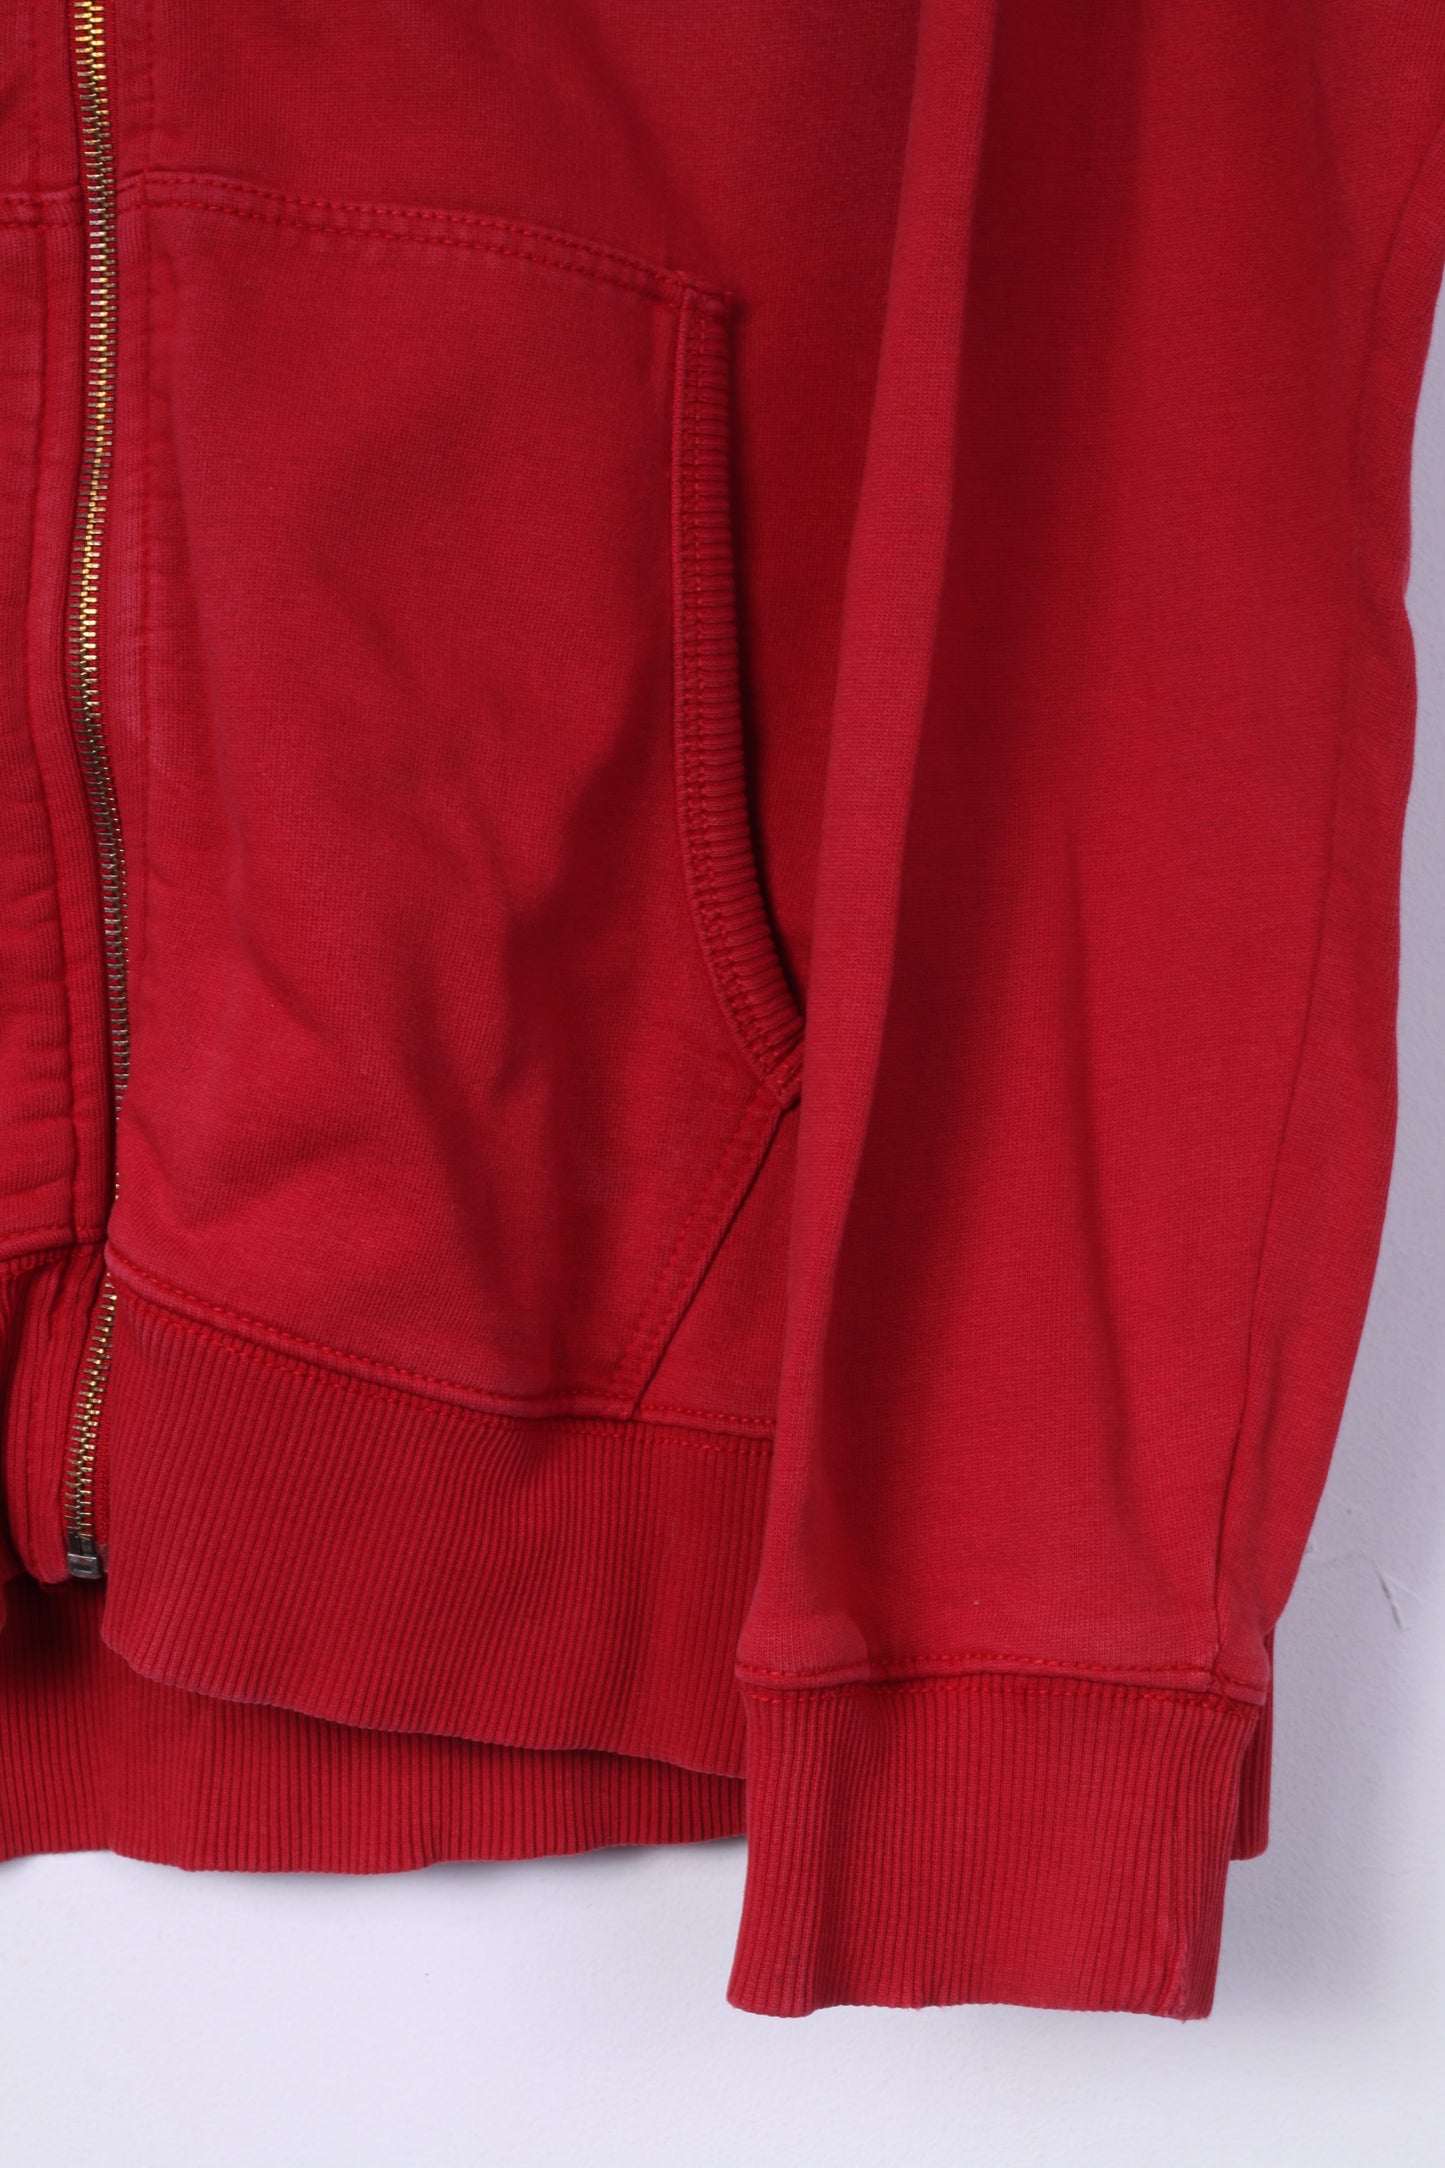 Lee Mens XL Sweatshirt Full Zipper Jumper Cotton Red